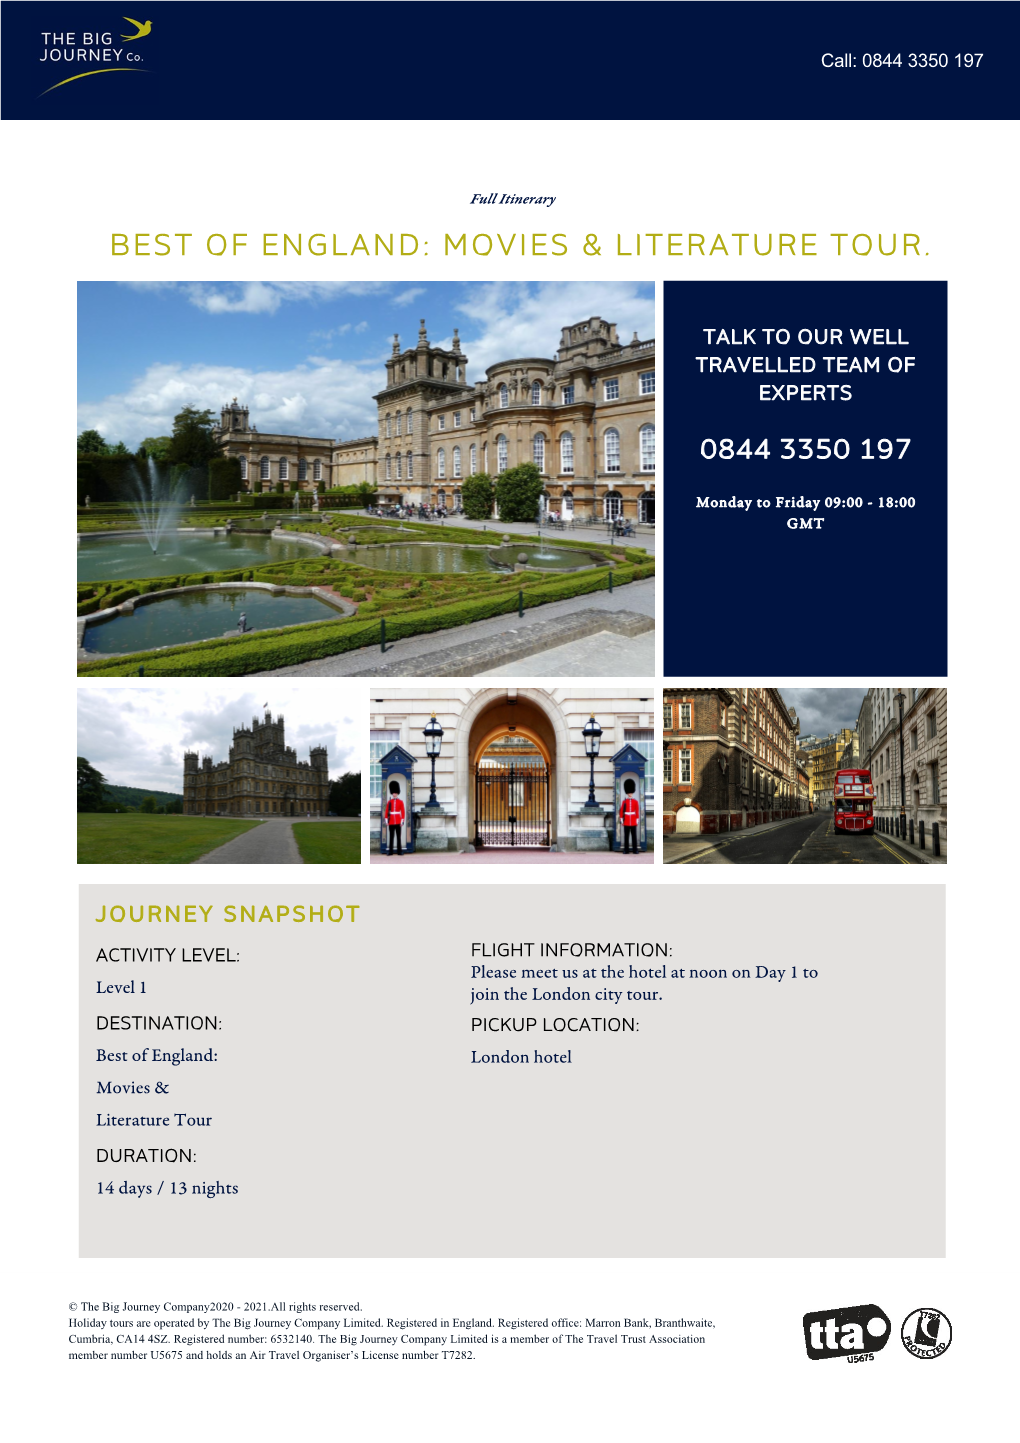 Best of England: Movies & Literature Tour